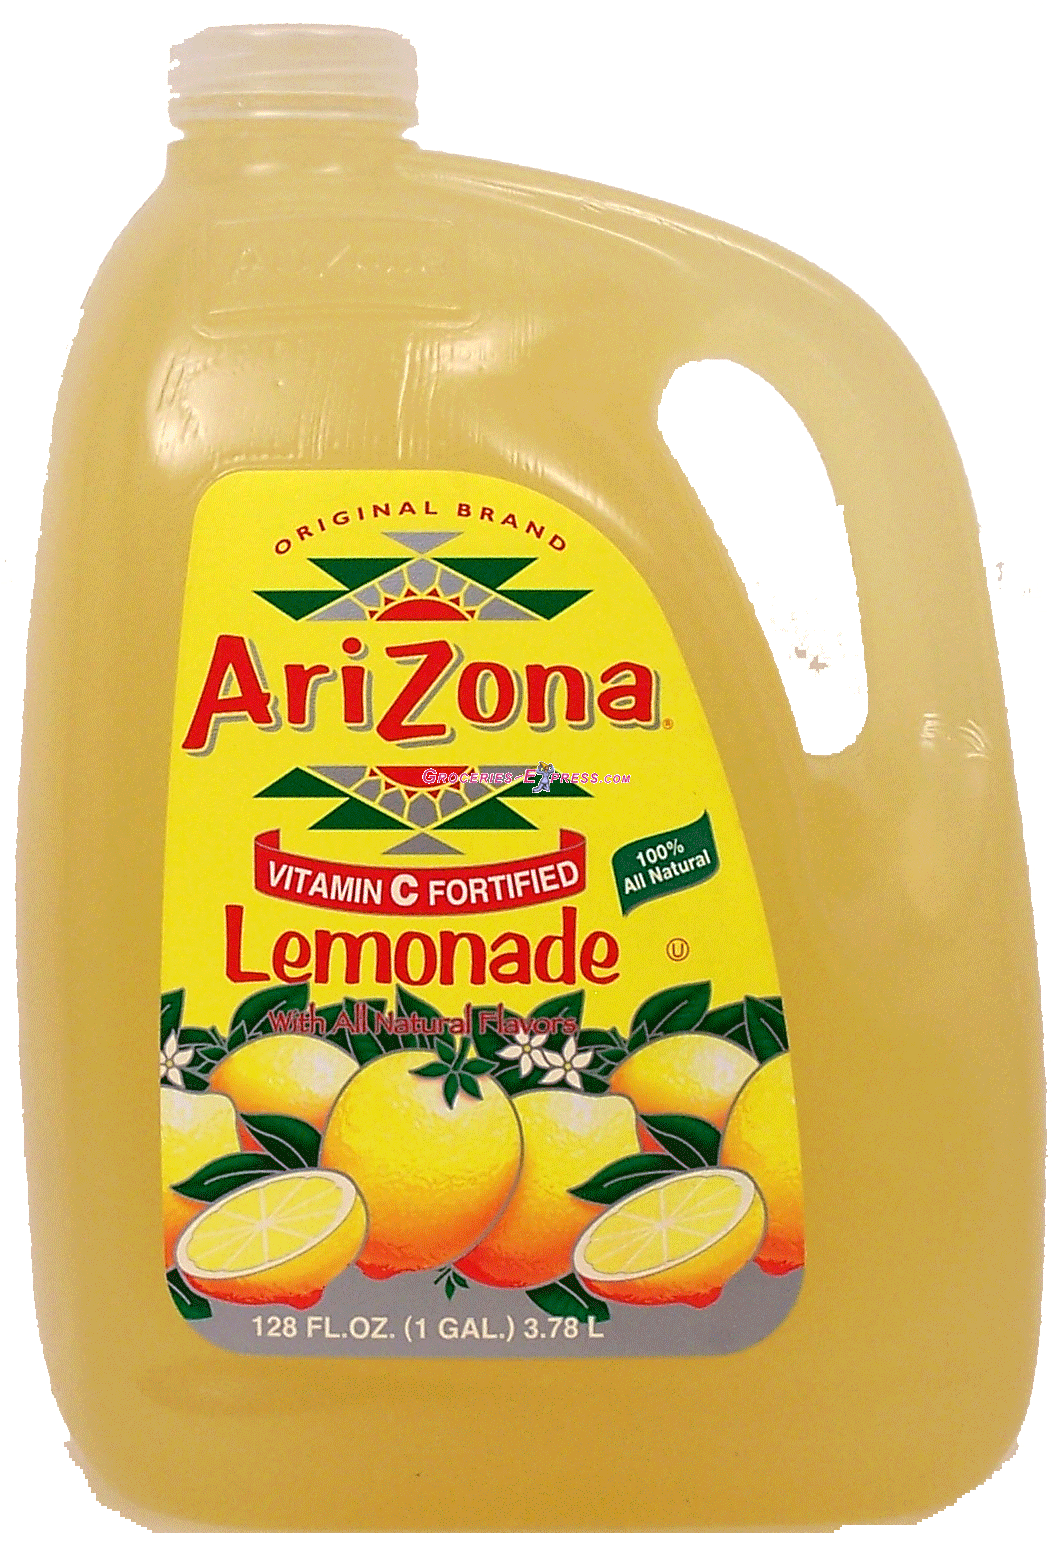 Arizona  lemonade, contains 10% fruit juice Full-Size Picture